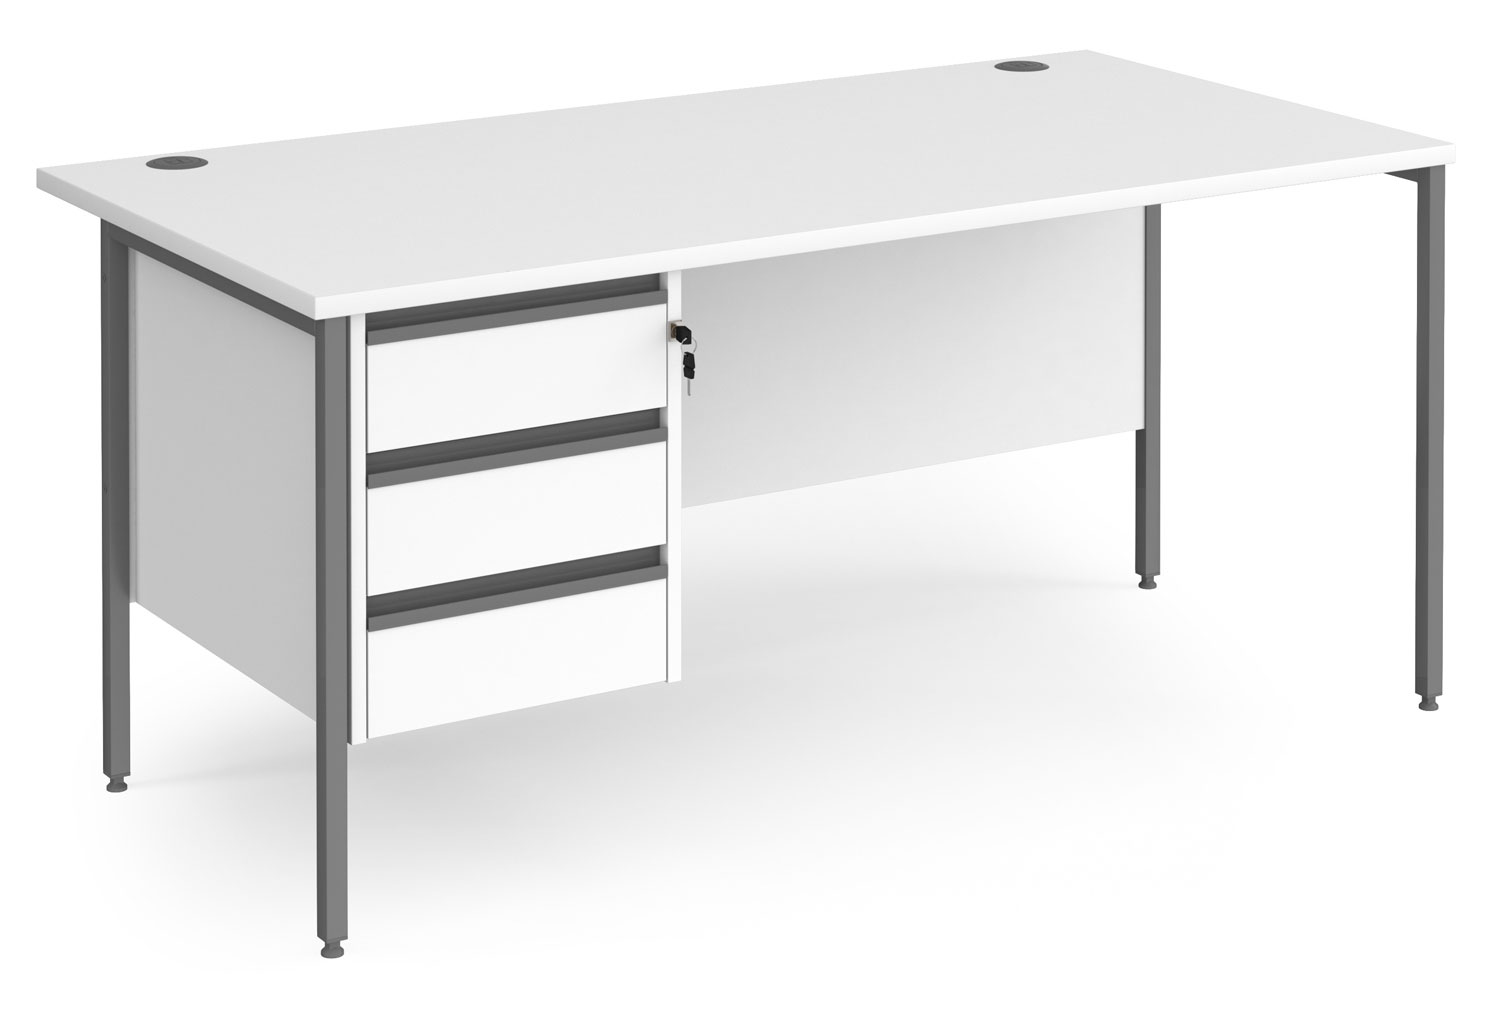 Value Line Classic+ Rectangular H-Leg Office Desk 3 Drawers (Graphite Leg), 160wx80dx73h (cm), White, Express Delivery